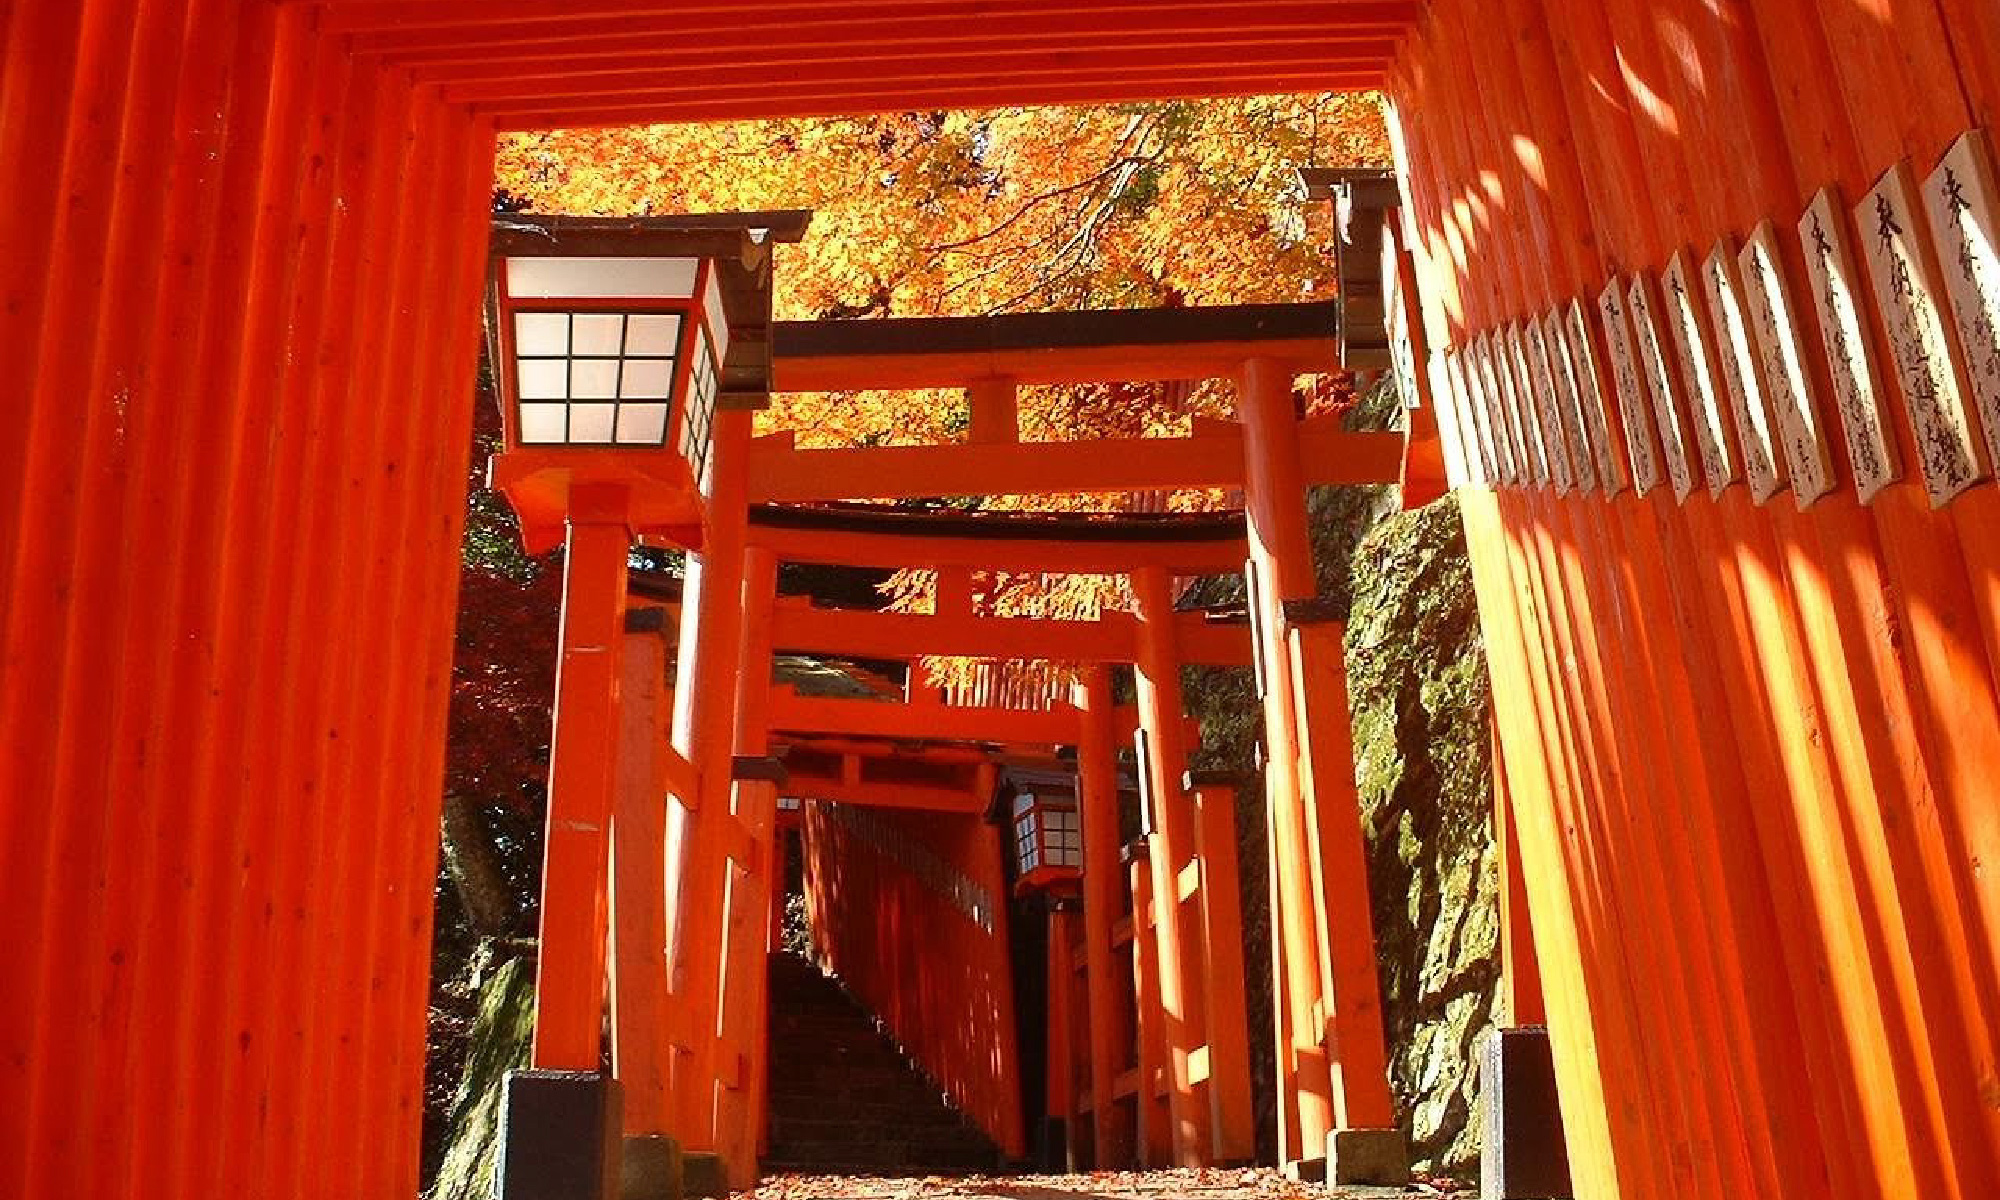 Taikodani Inari jinja Shrine